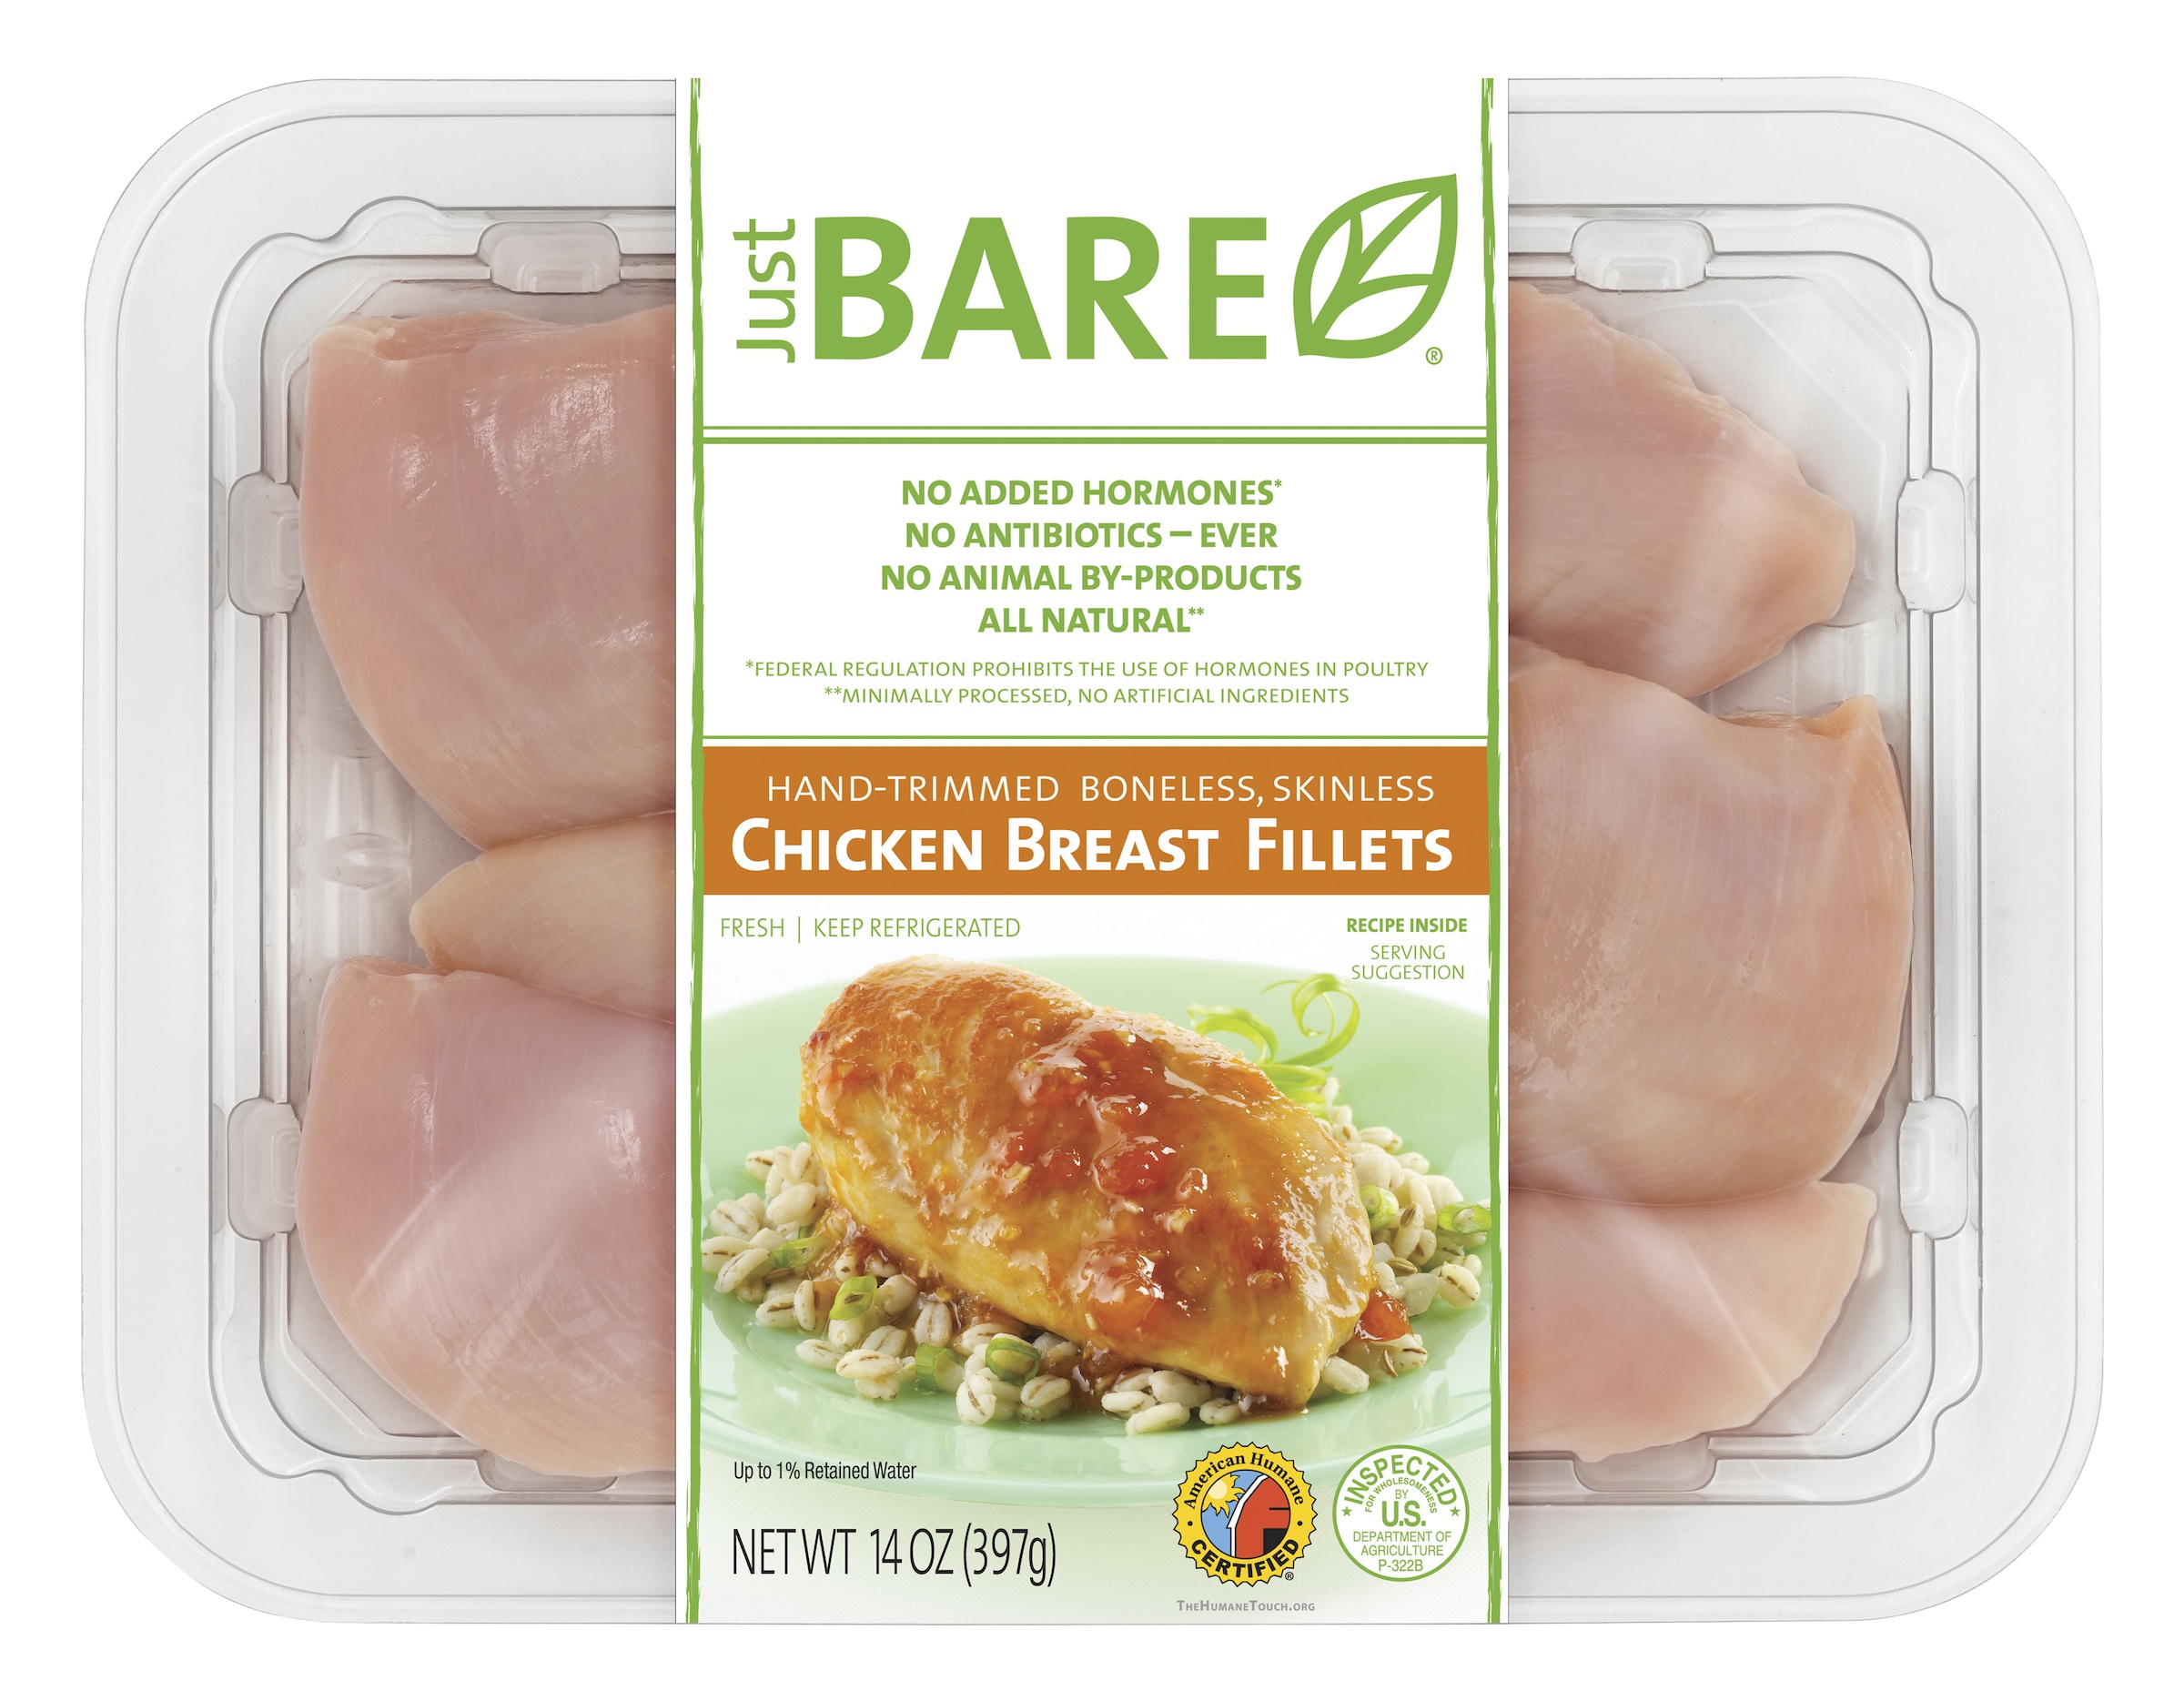 CSRWire - Just Bare(R) Chicken Adds American Humane Certified(R